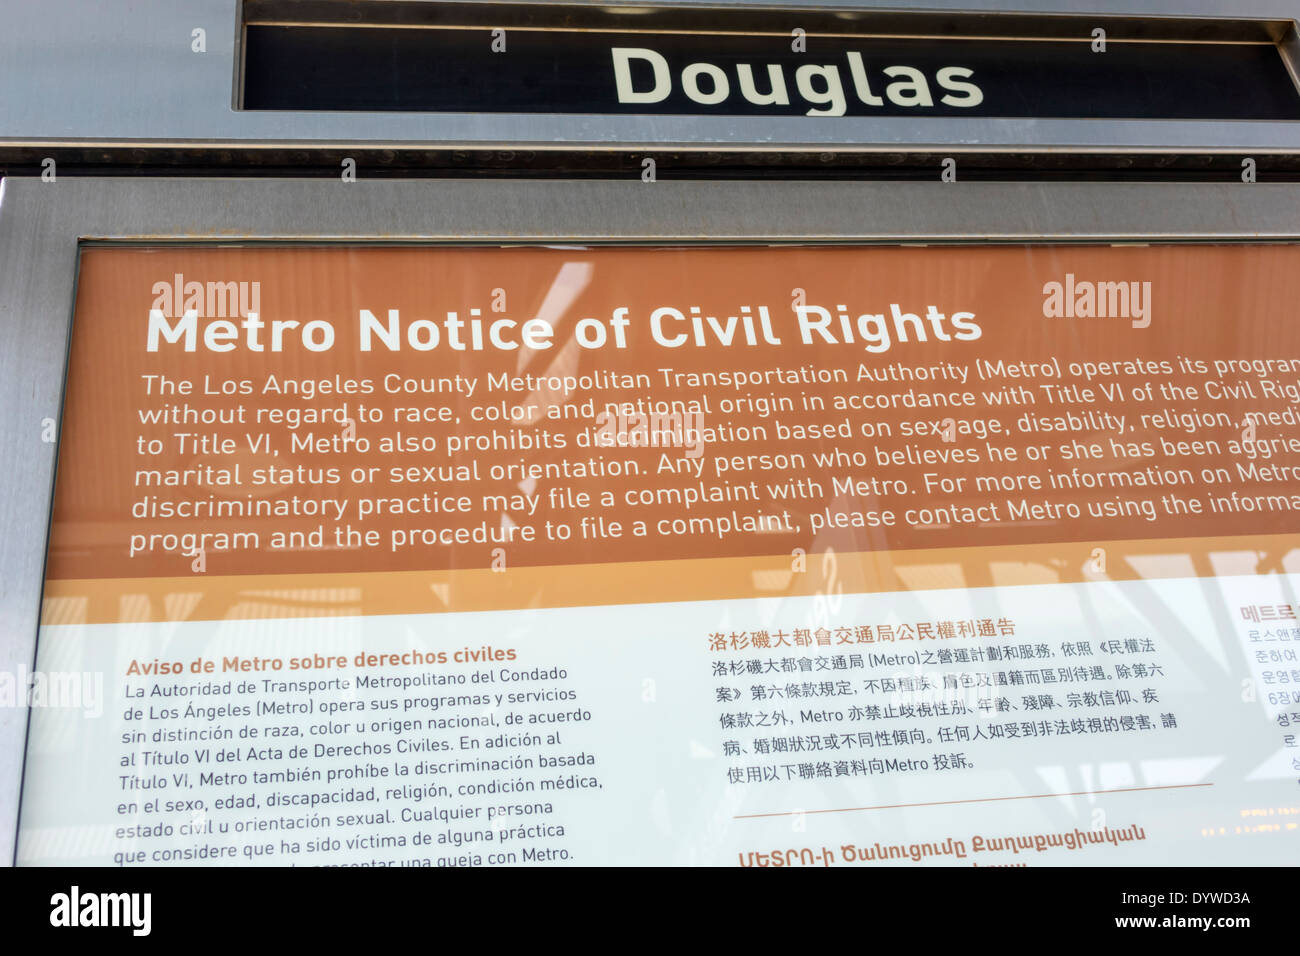 Los Angeles California,LA County Metro Rail,urban rail system,mass transit,Green Line,Douglas station,sign,notice,civil rights,policy,anti discriminat Stock Photo